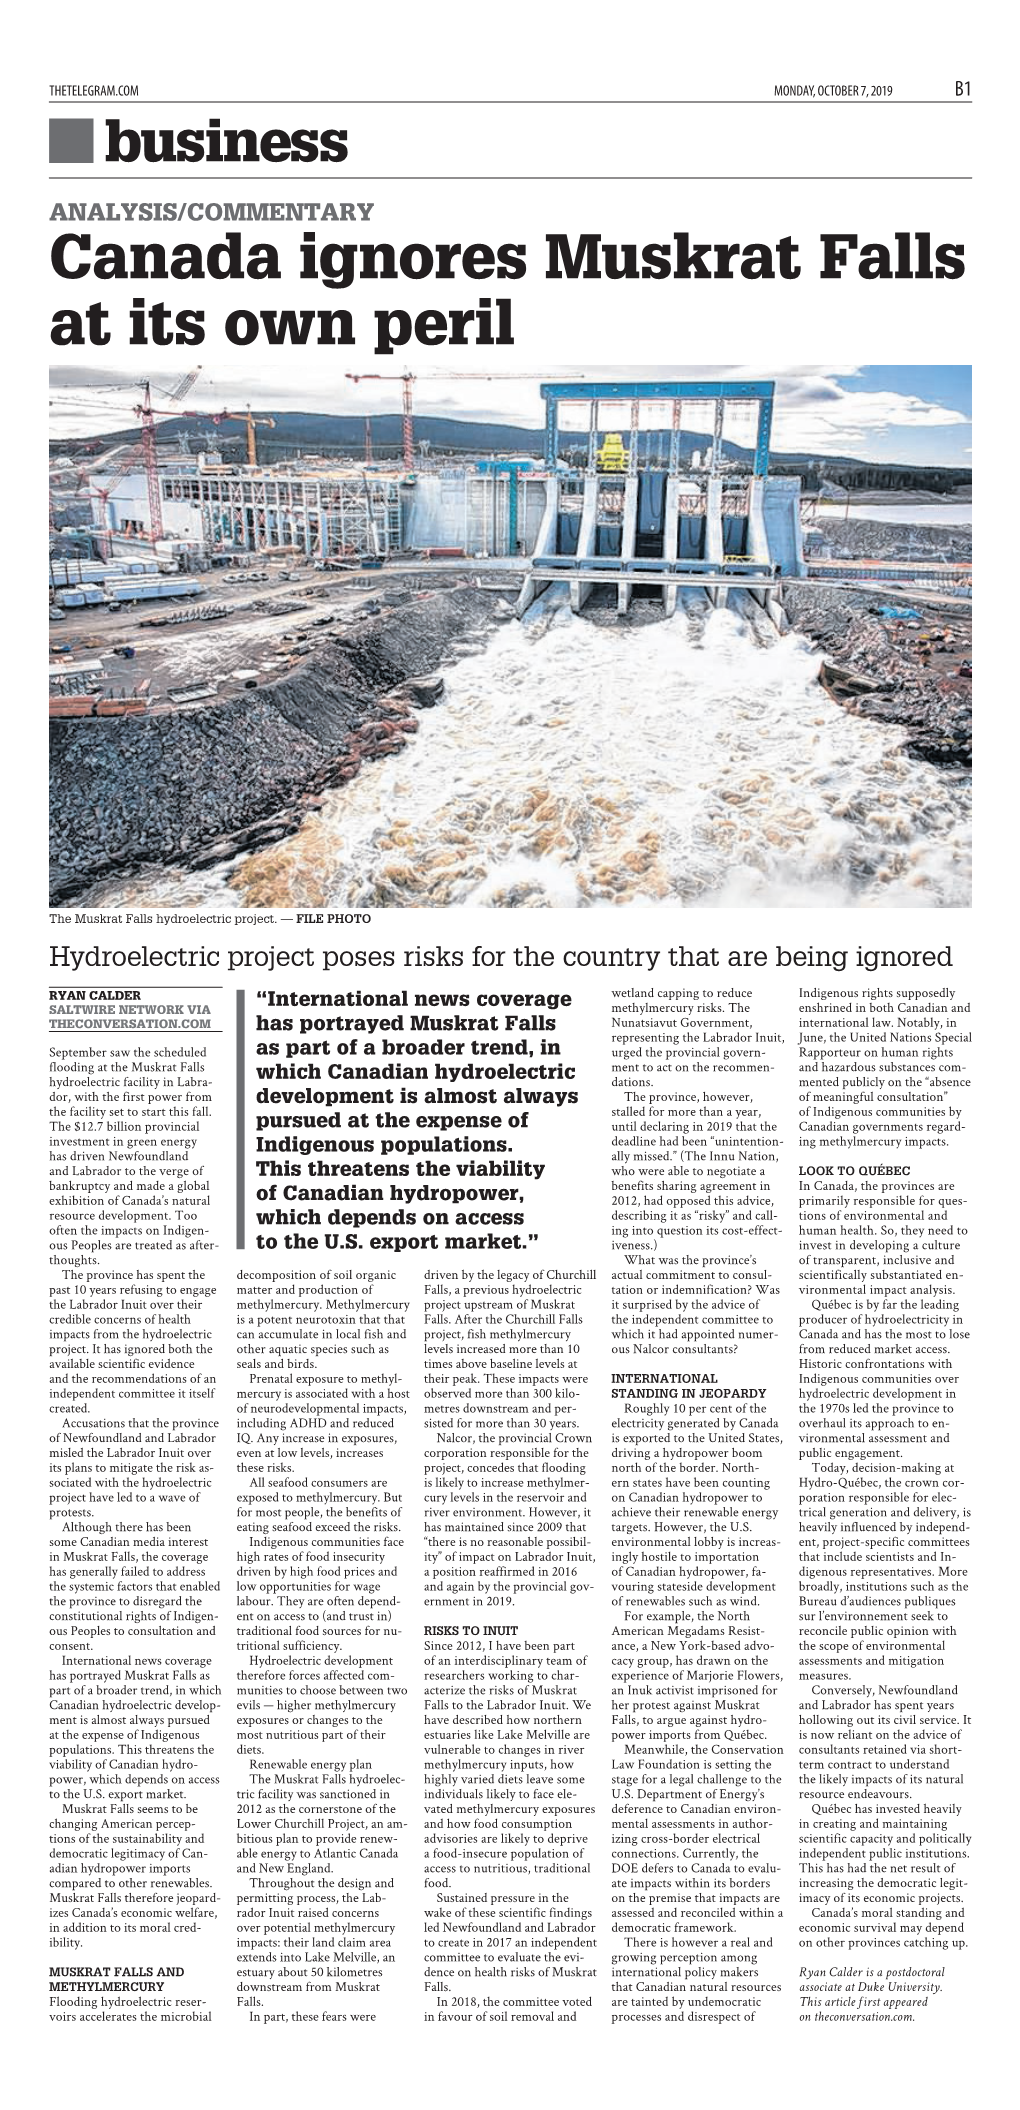 Canada Ignores Muskrat Falls at Its Own Peril